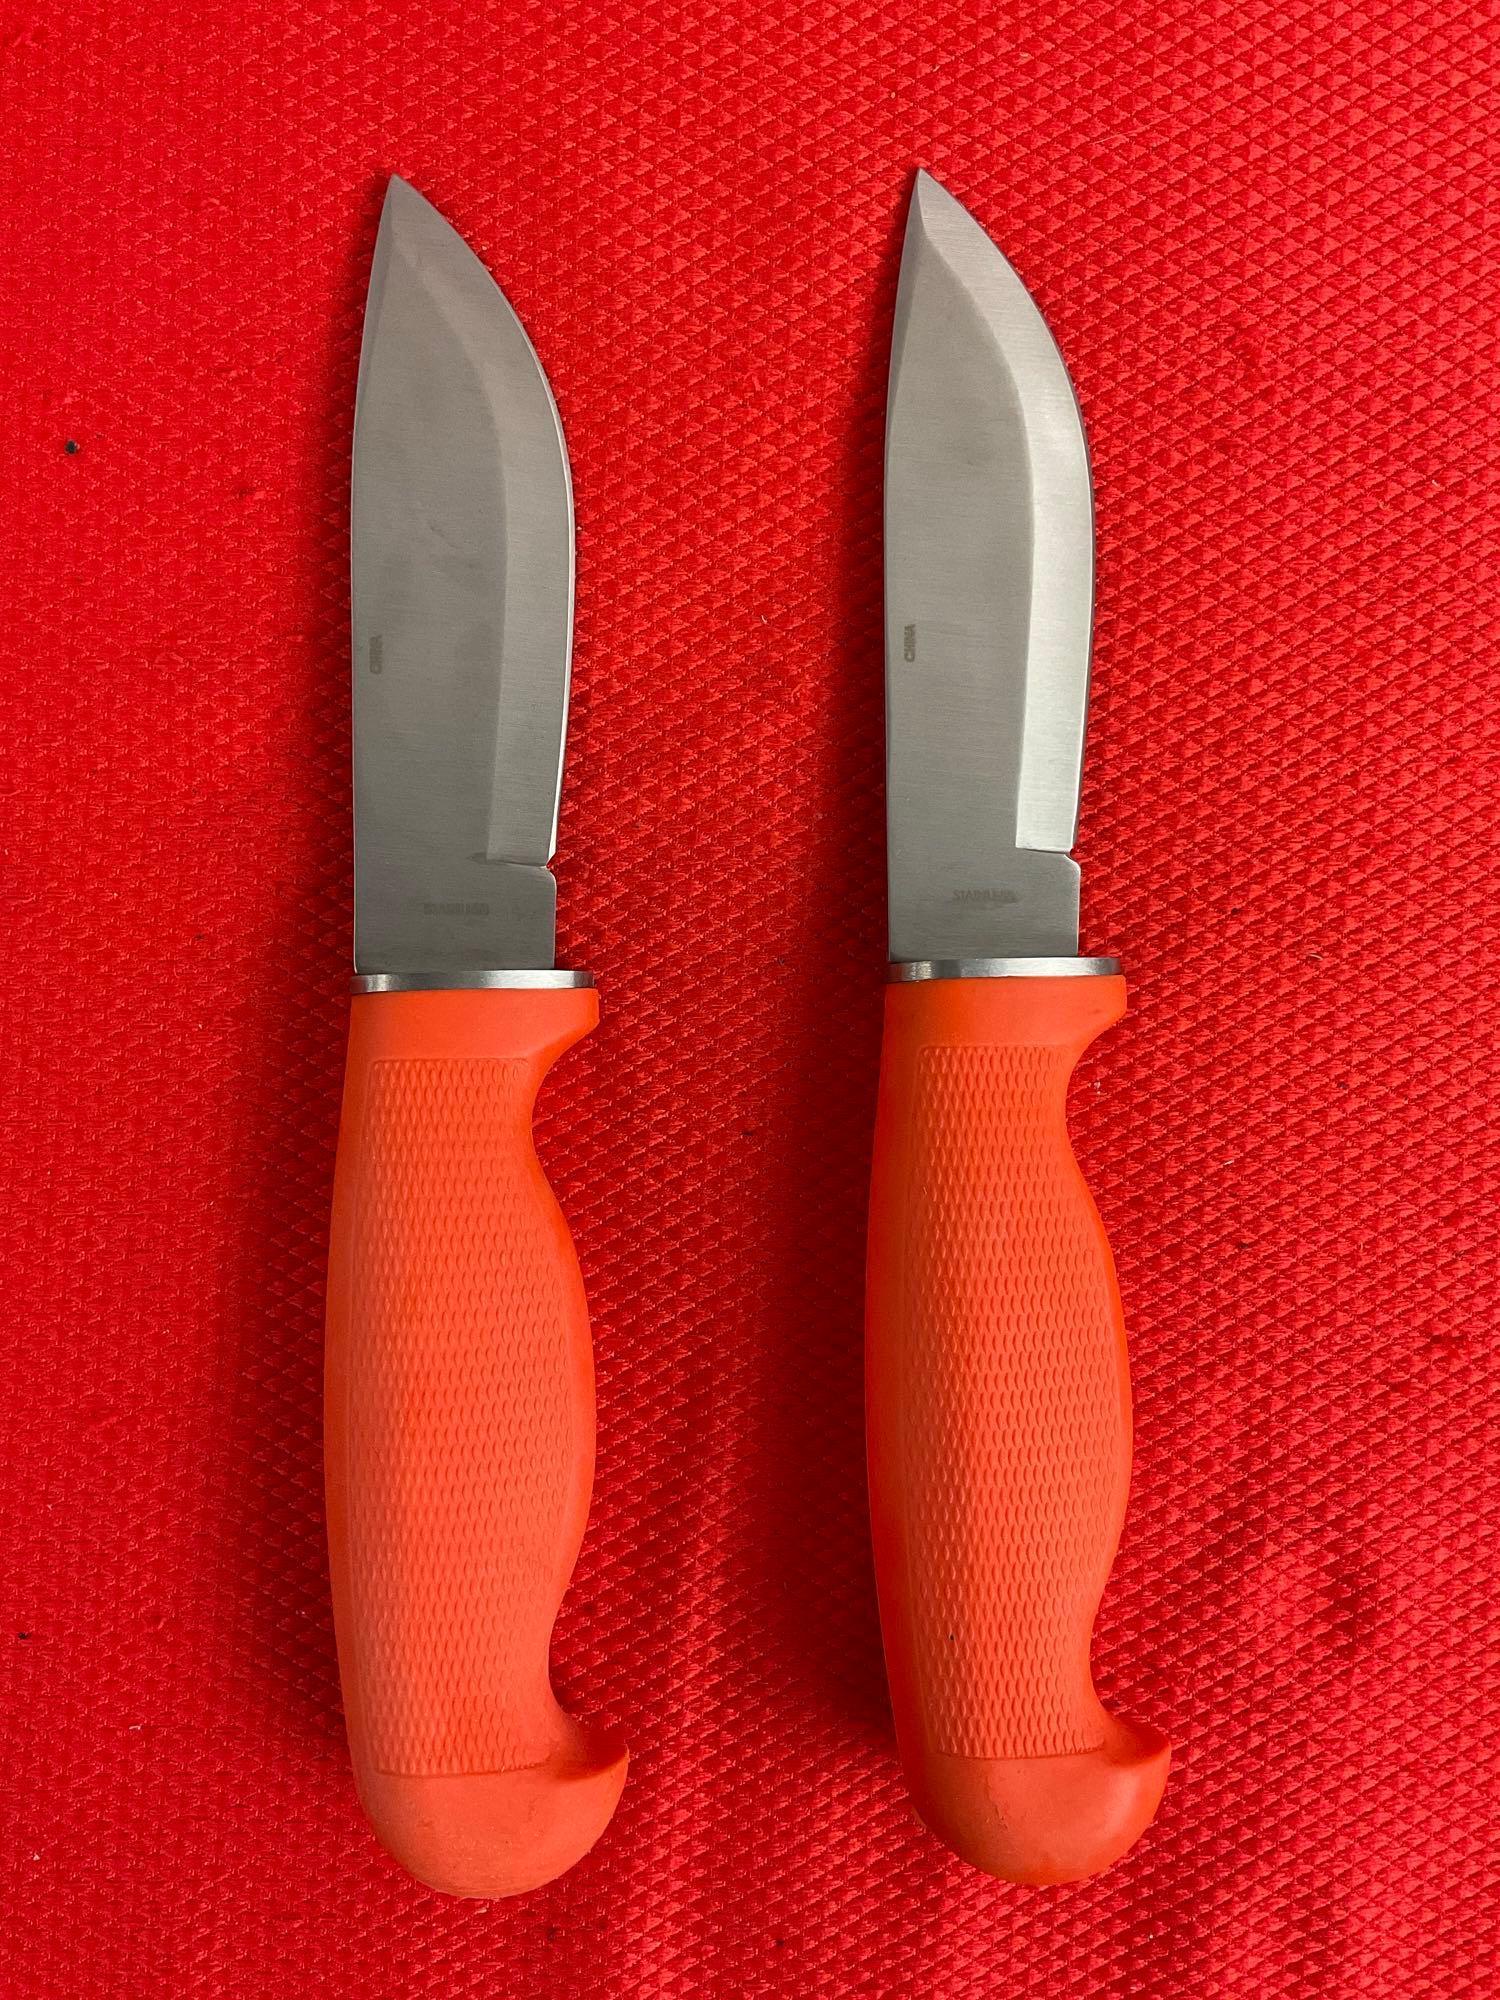 2 pcs Rite Edge 4" Hunter's Choice Hunting Knives Model 210978 w/ Nylon Sheathes. NIB. See pics.